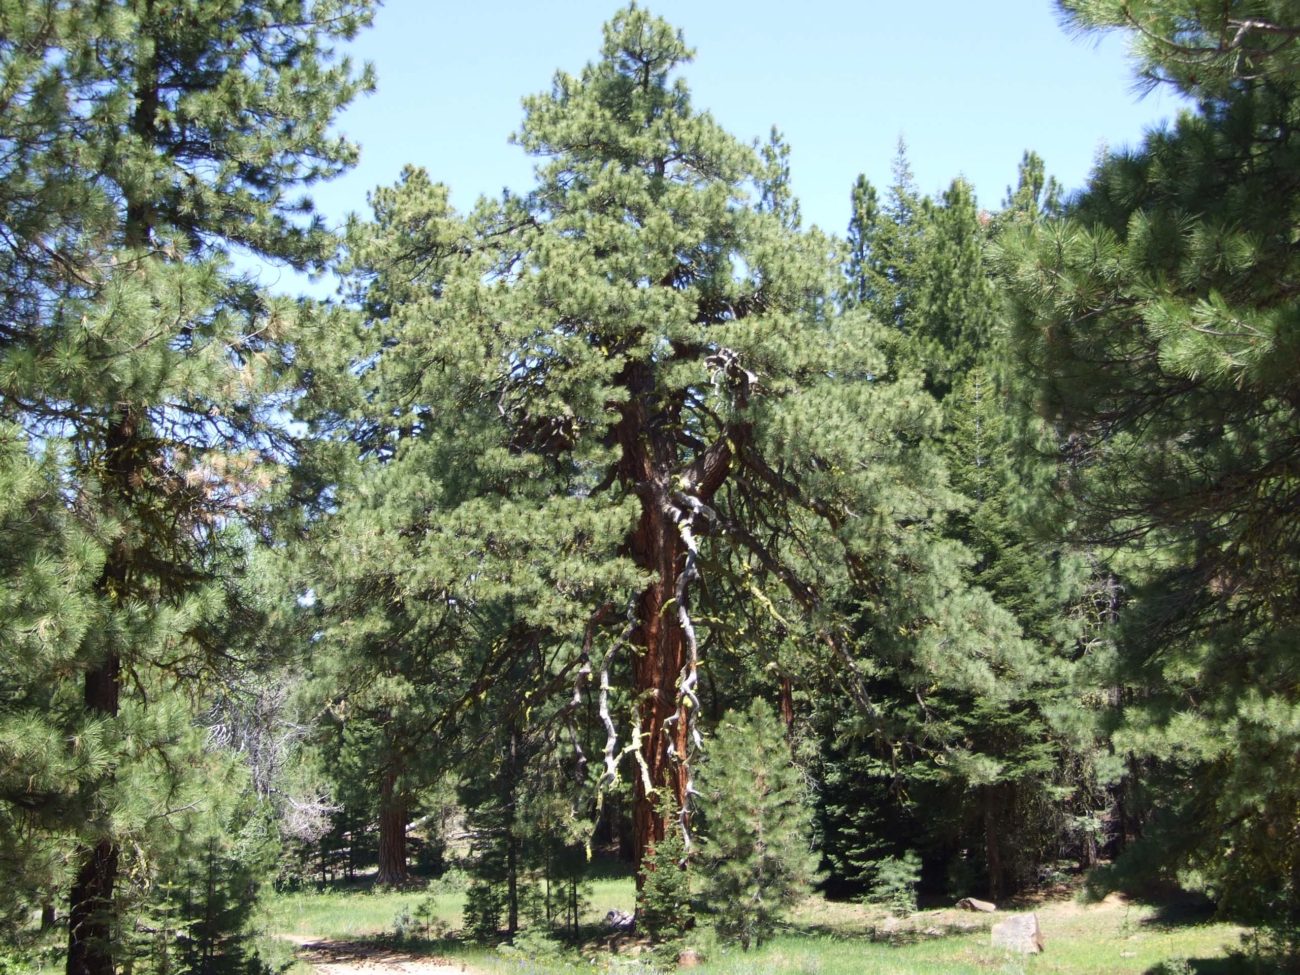 Washoe pine. P. Davis.